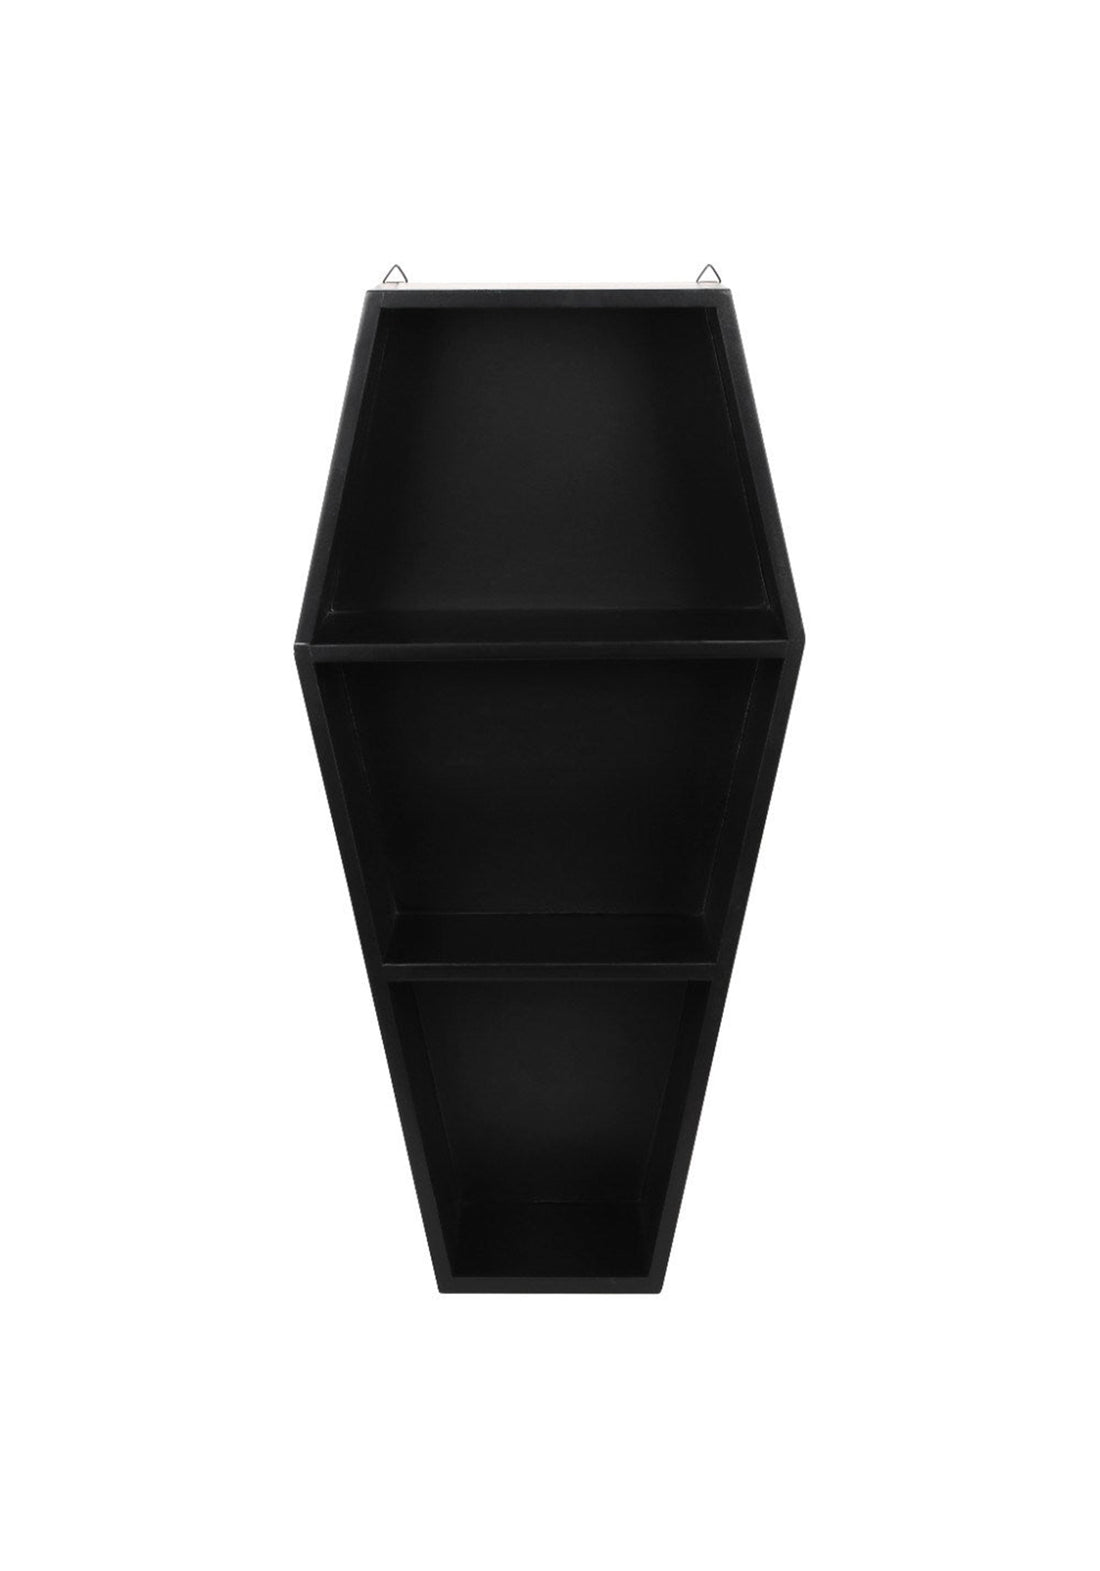 Black Coffin-Shaped Shelf for Displaying Gemstones 2